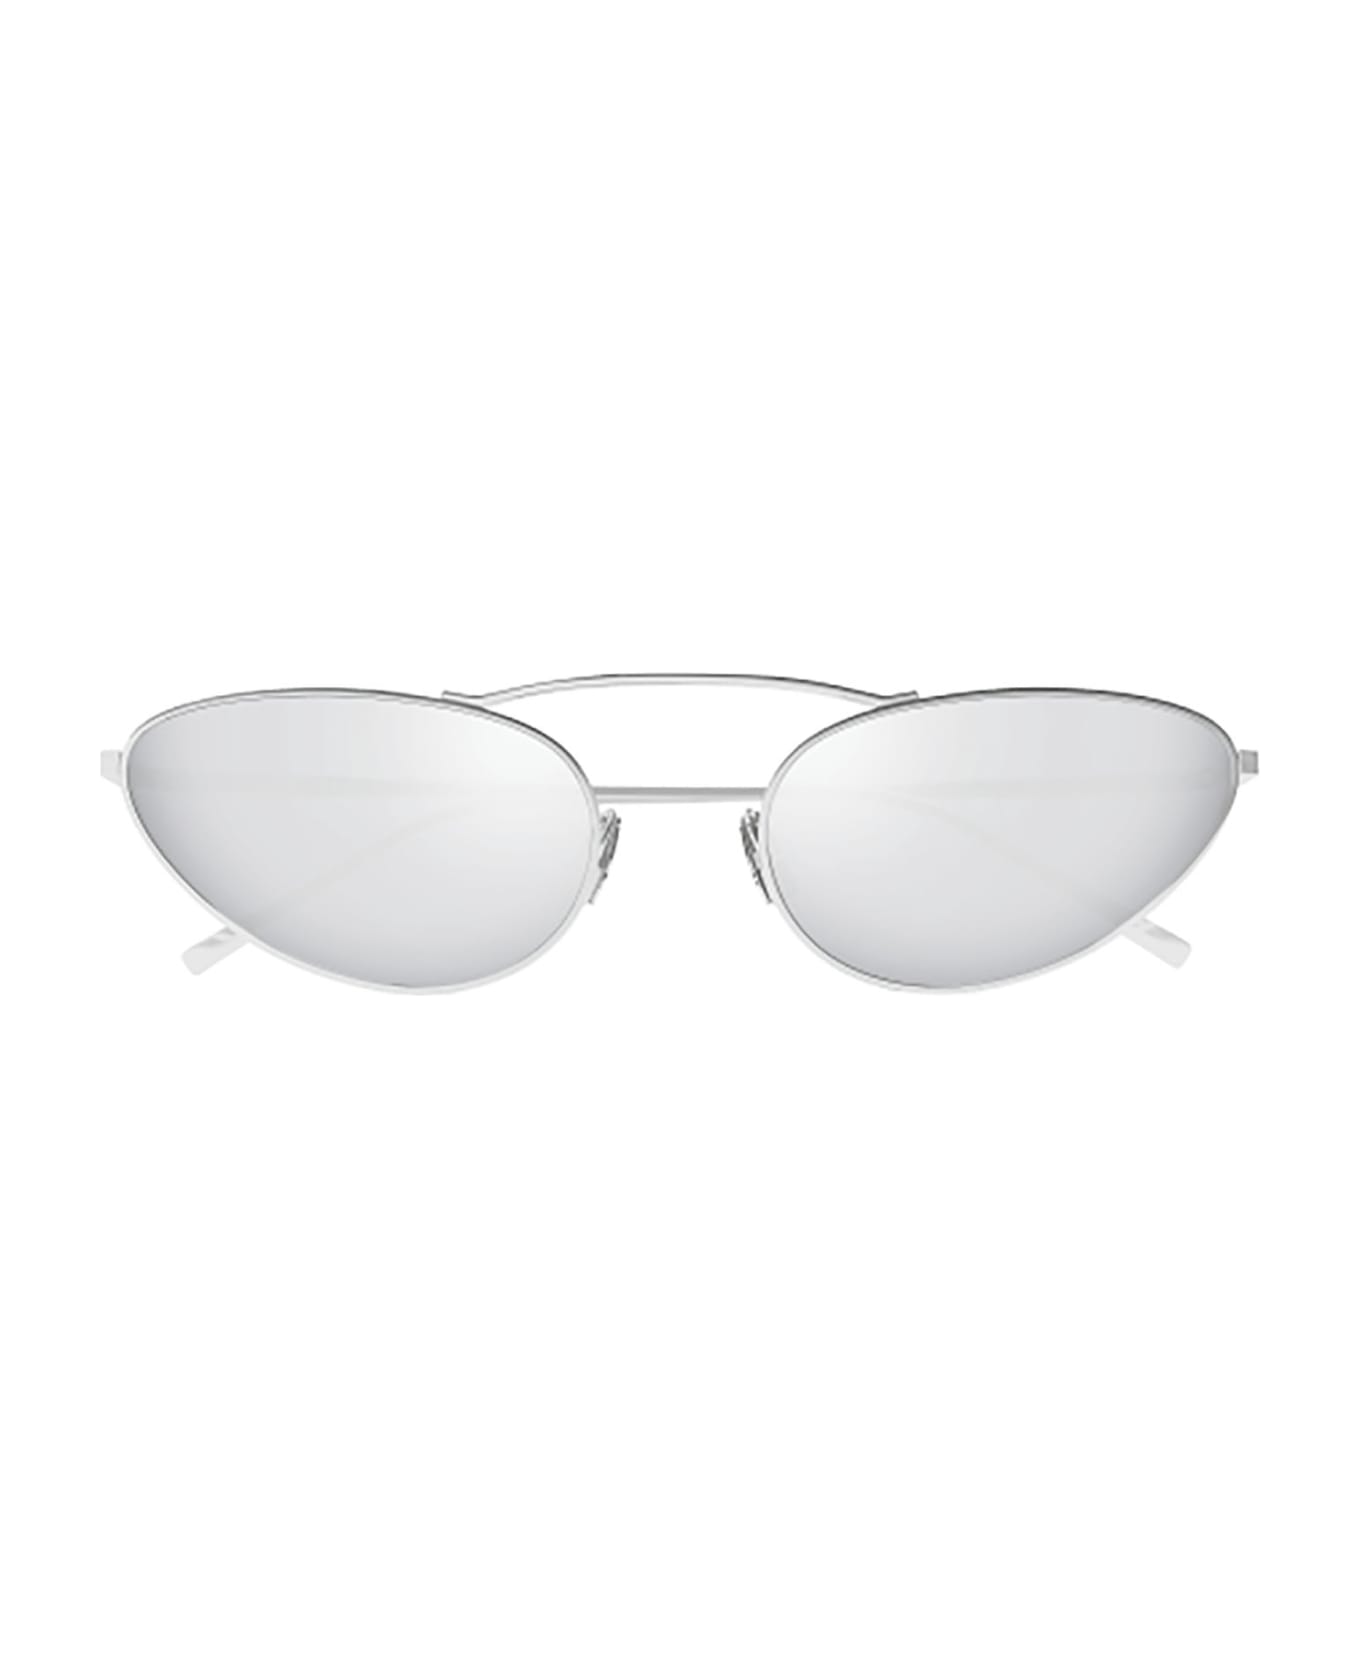 Saint Laurent Eyewear SL 538 Sunglasses - Silver Silver Silver